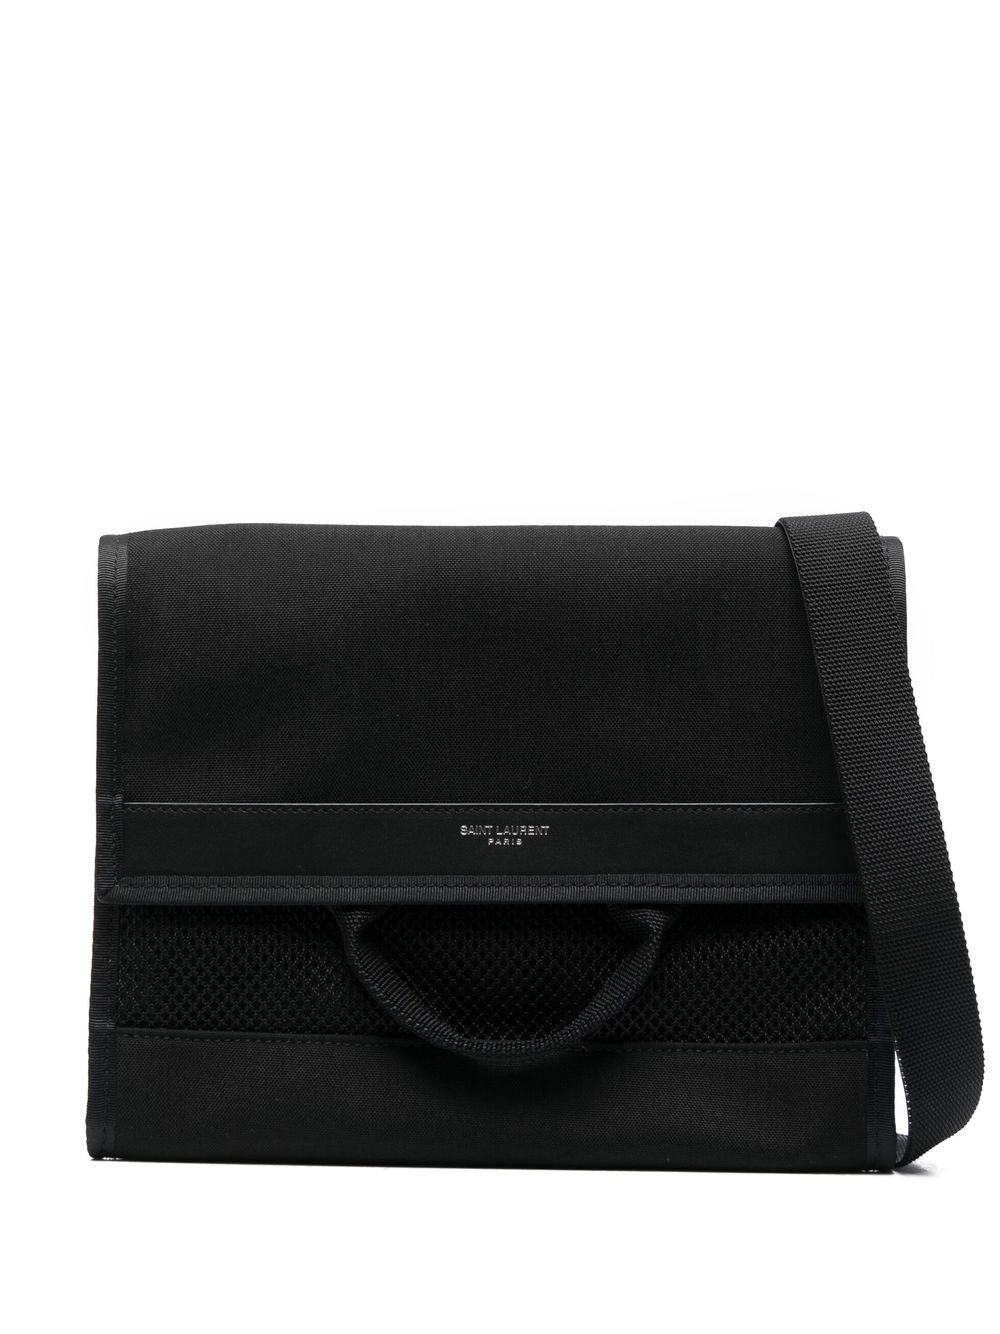 Saint Laurent Messenger Bag In Black